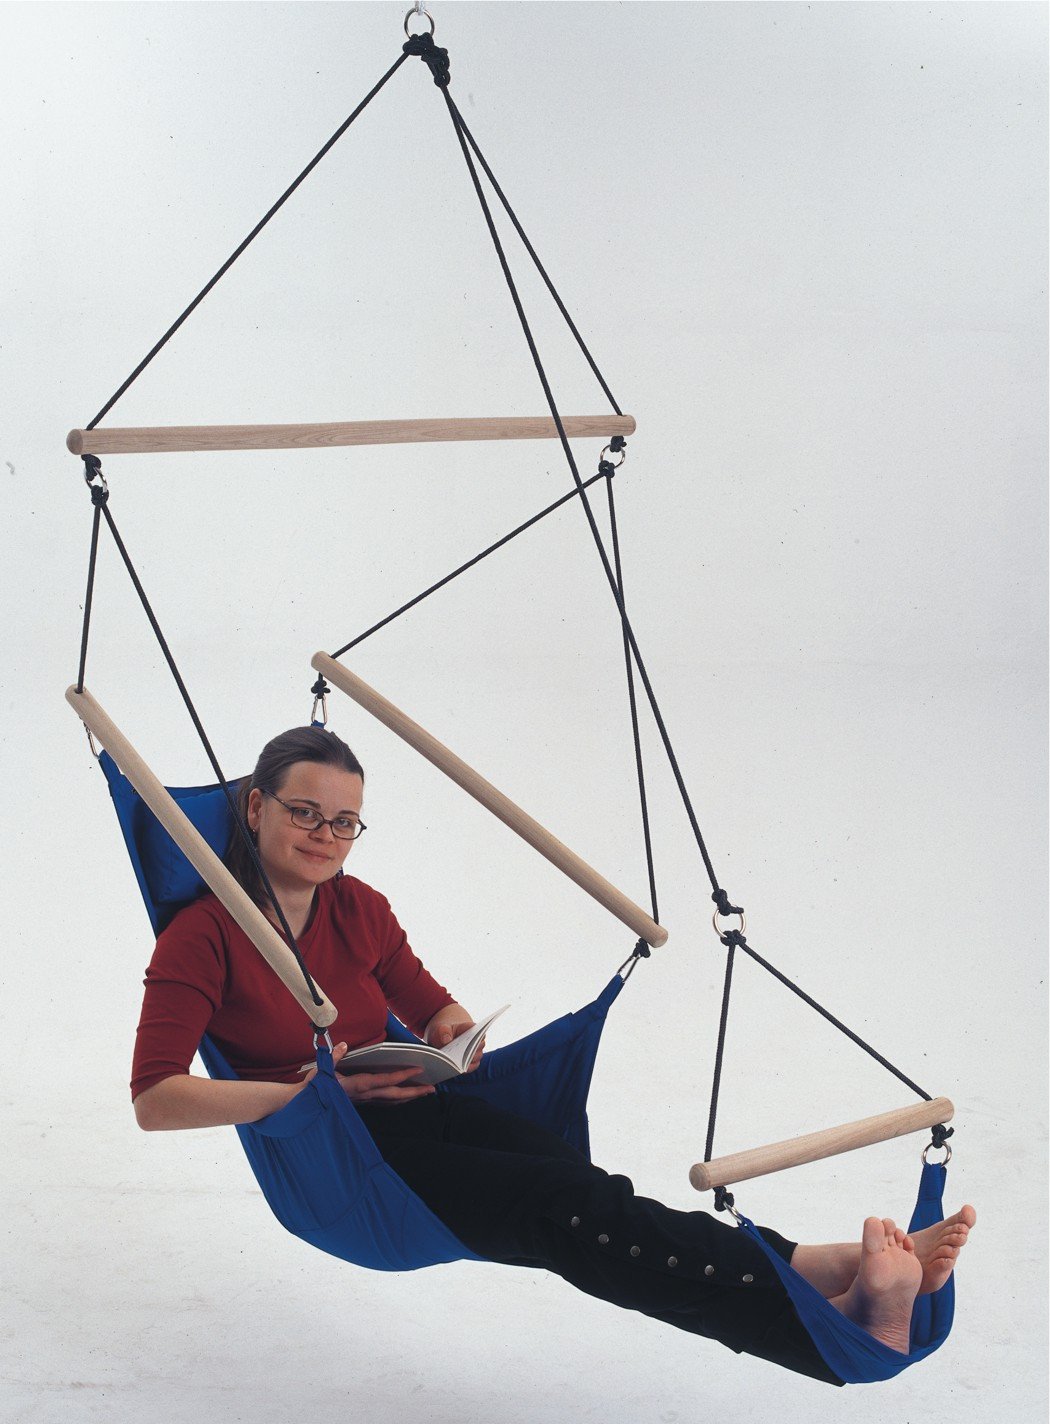 Byer of Maine Swinger hanging Chair Blue # A211004 Best Seller - Swings N'  Hammocks